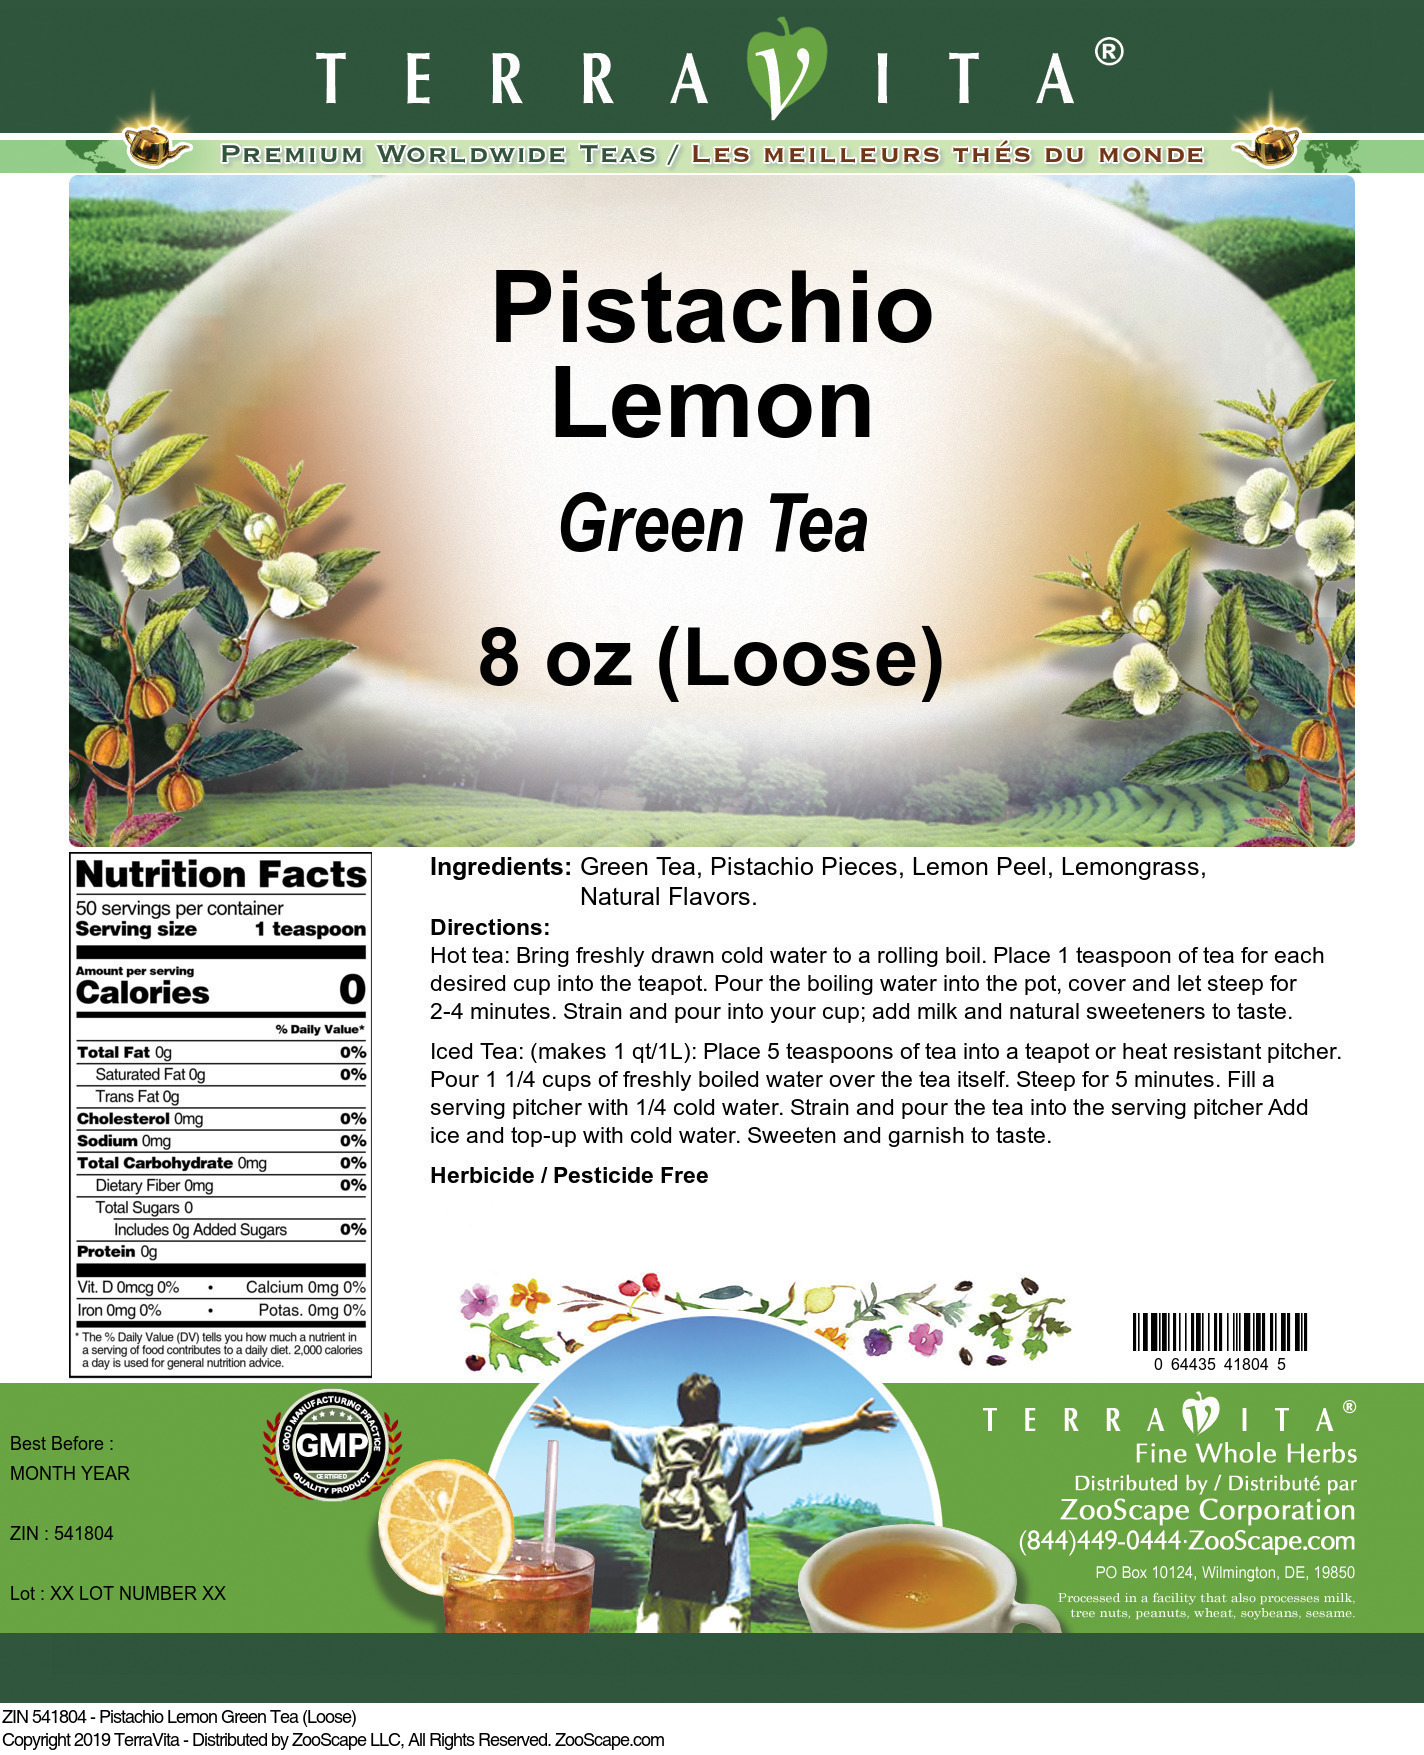 Pistachio Lemon Green Tea (Loose) - Label